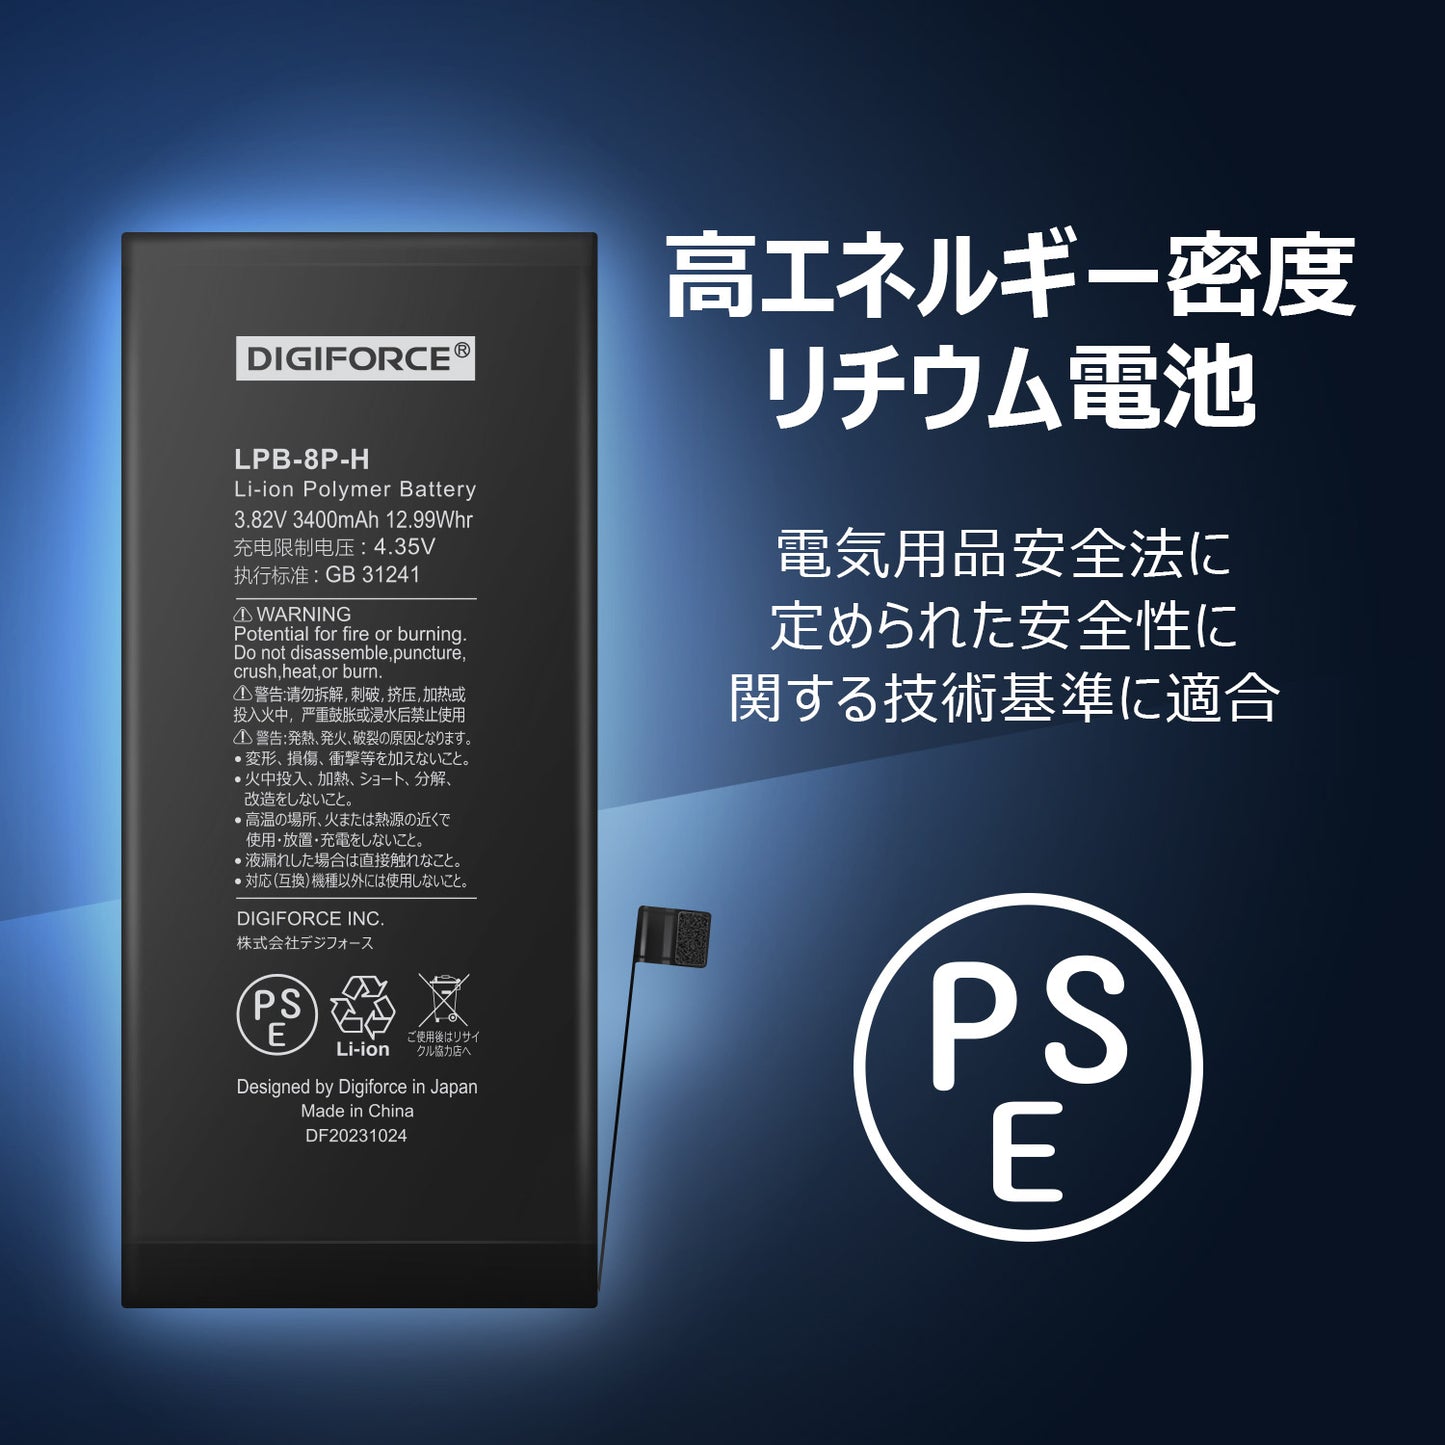 【iPhone 8 Plus】互換バッテリー　取説・工具付き　T2-IP8PH